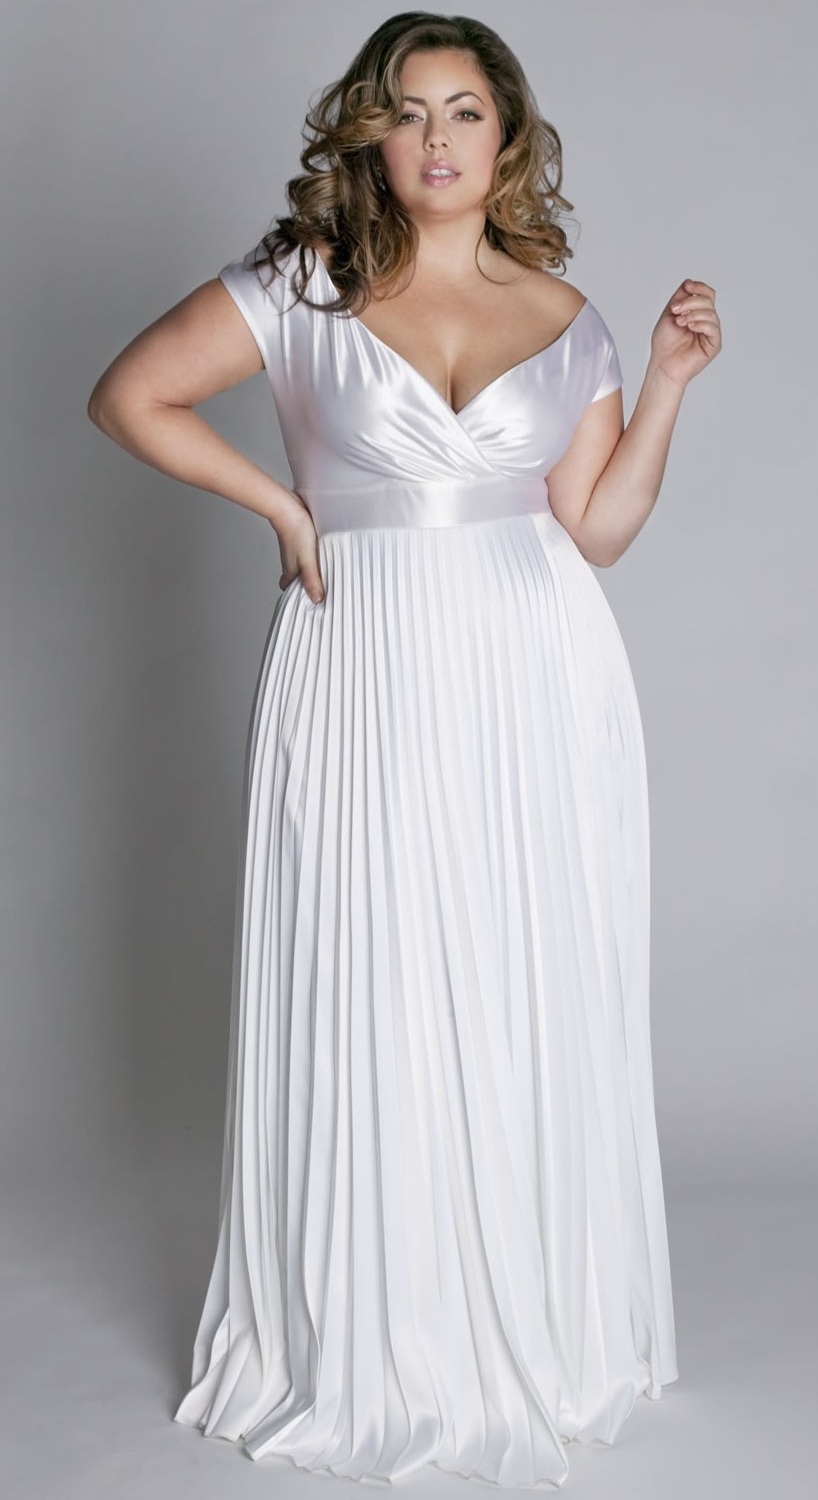 wedding-dresses-for-plus-size-women-unixweddingcom-818x1500.jpg